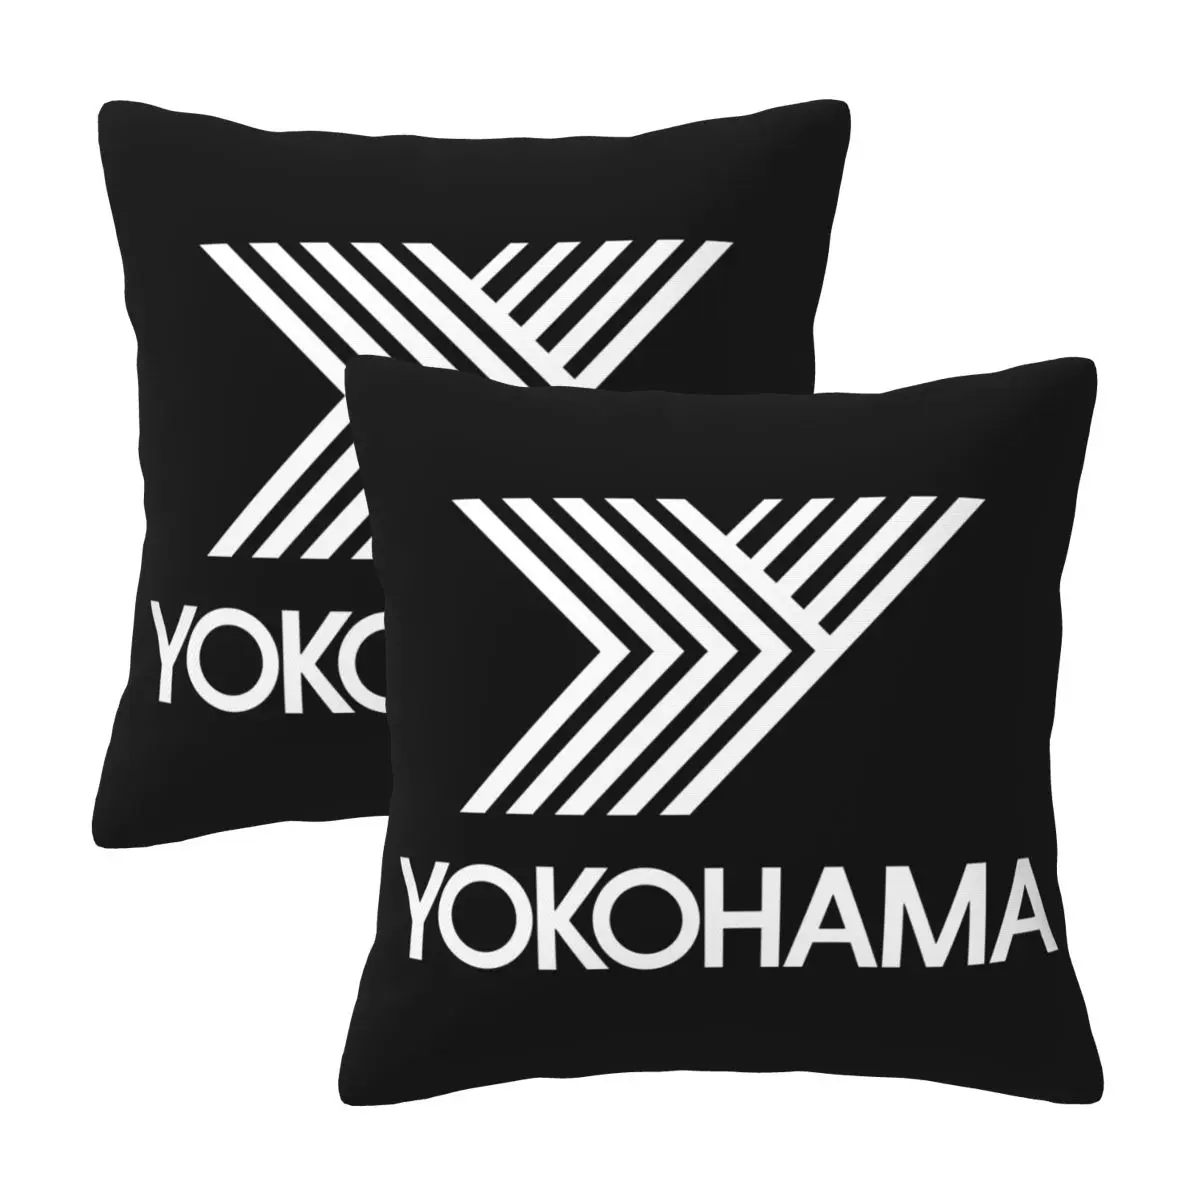 

YOKOHAMA Fashion Pillowcases Decorative Pillow Covers Soft and Cozy 2 PCS